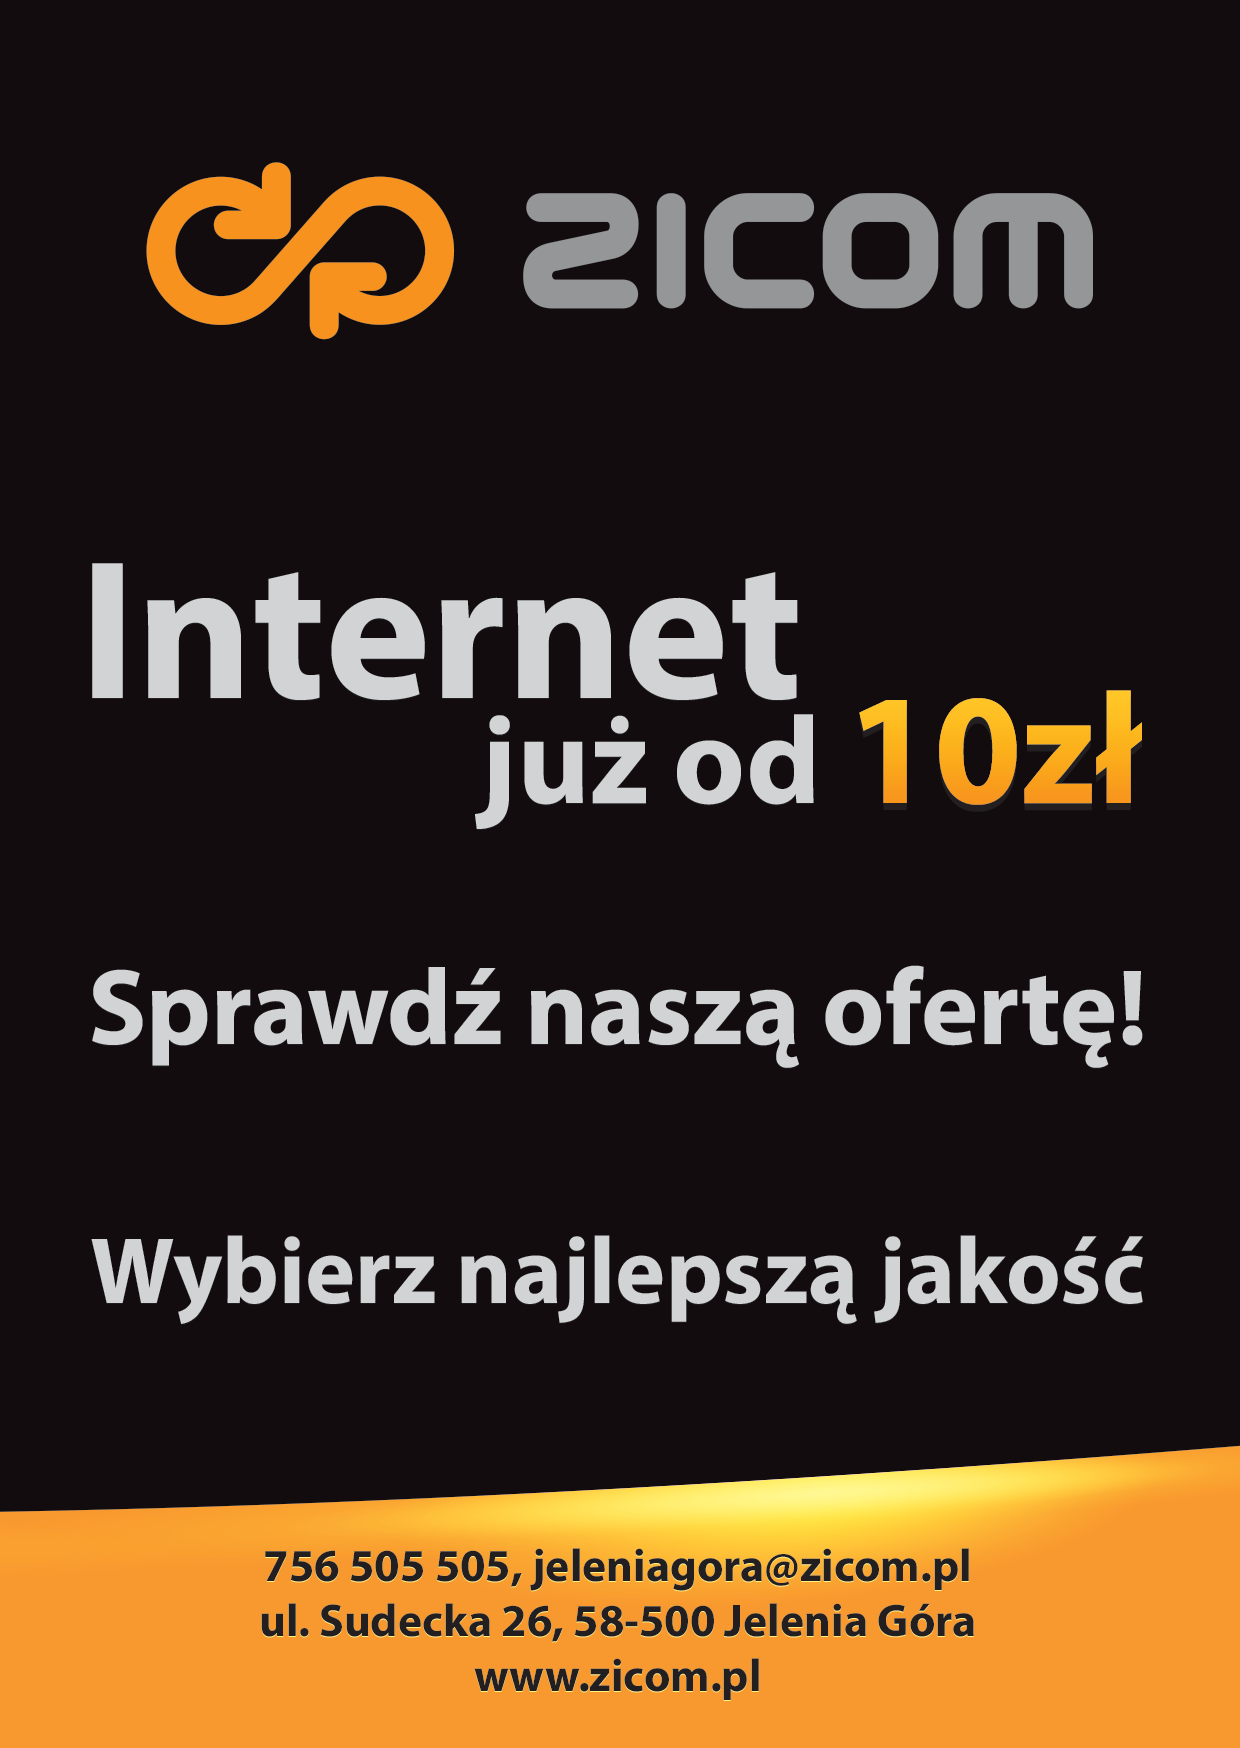 ZICOM - Flyer A6 - Internet. Front